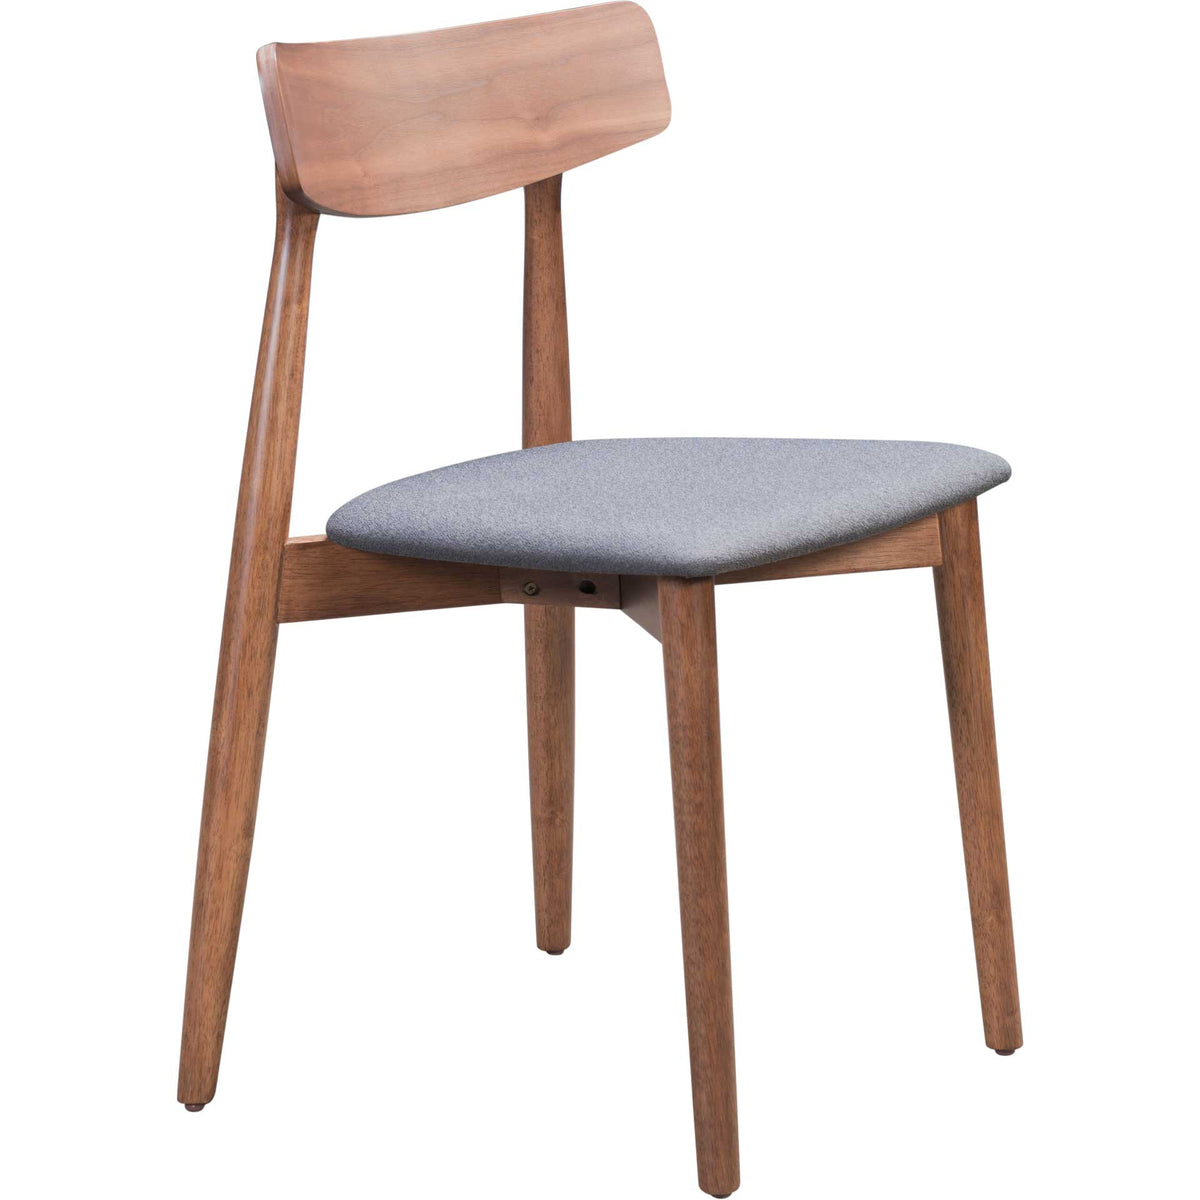 Norwich Dining Chair Walnut/Dark Gray - Froy.com